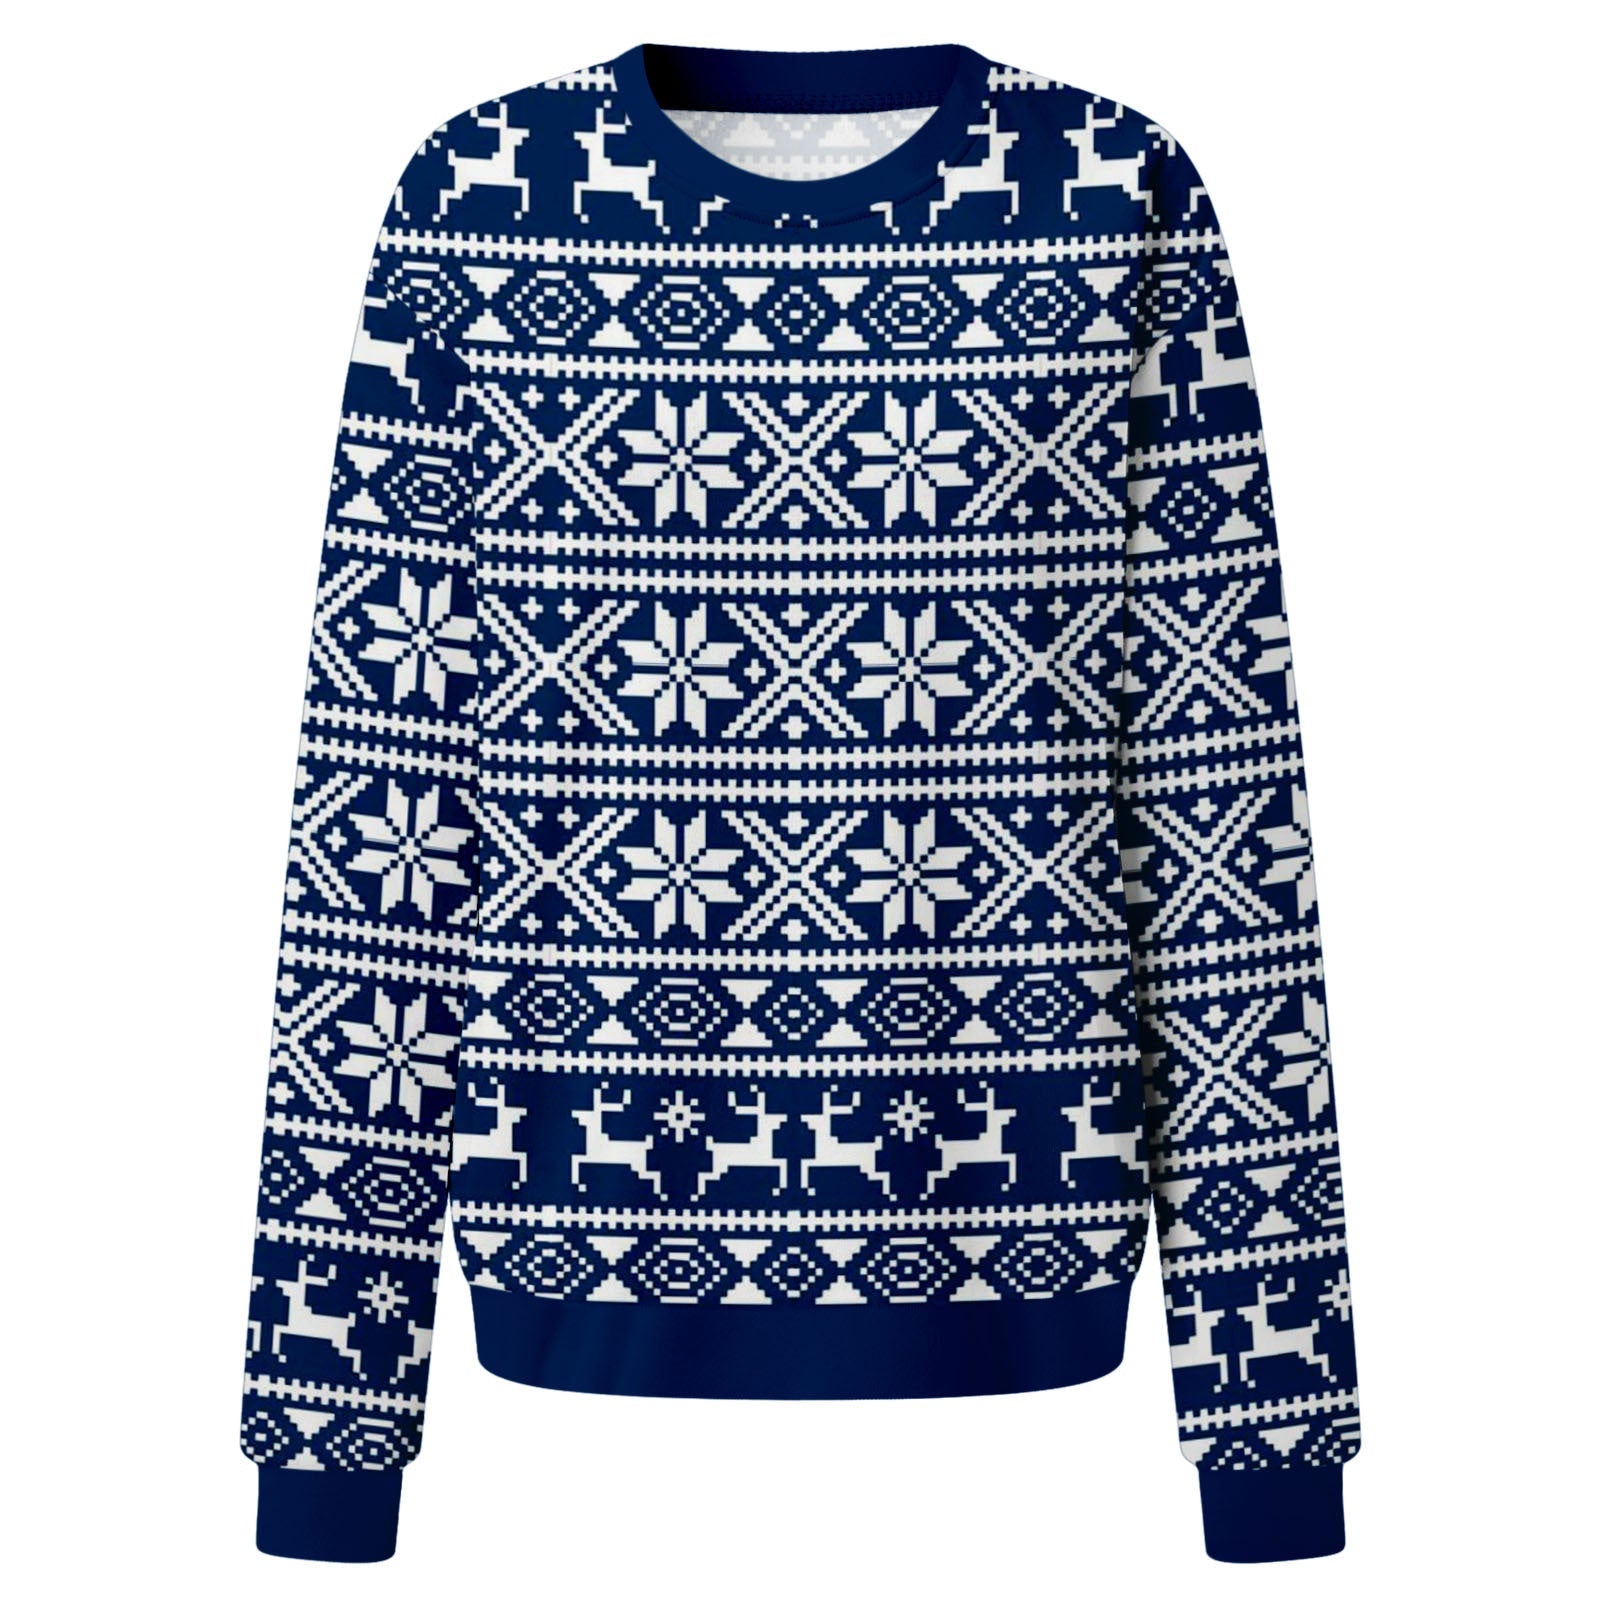 Women's printed elk Christmas sweater - Sweaters -  Trend Goods